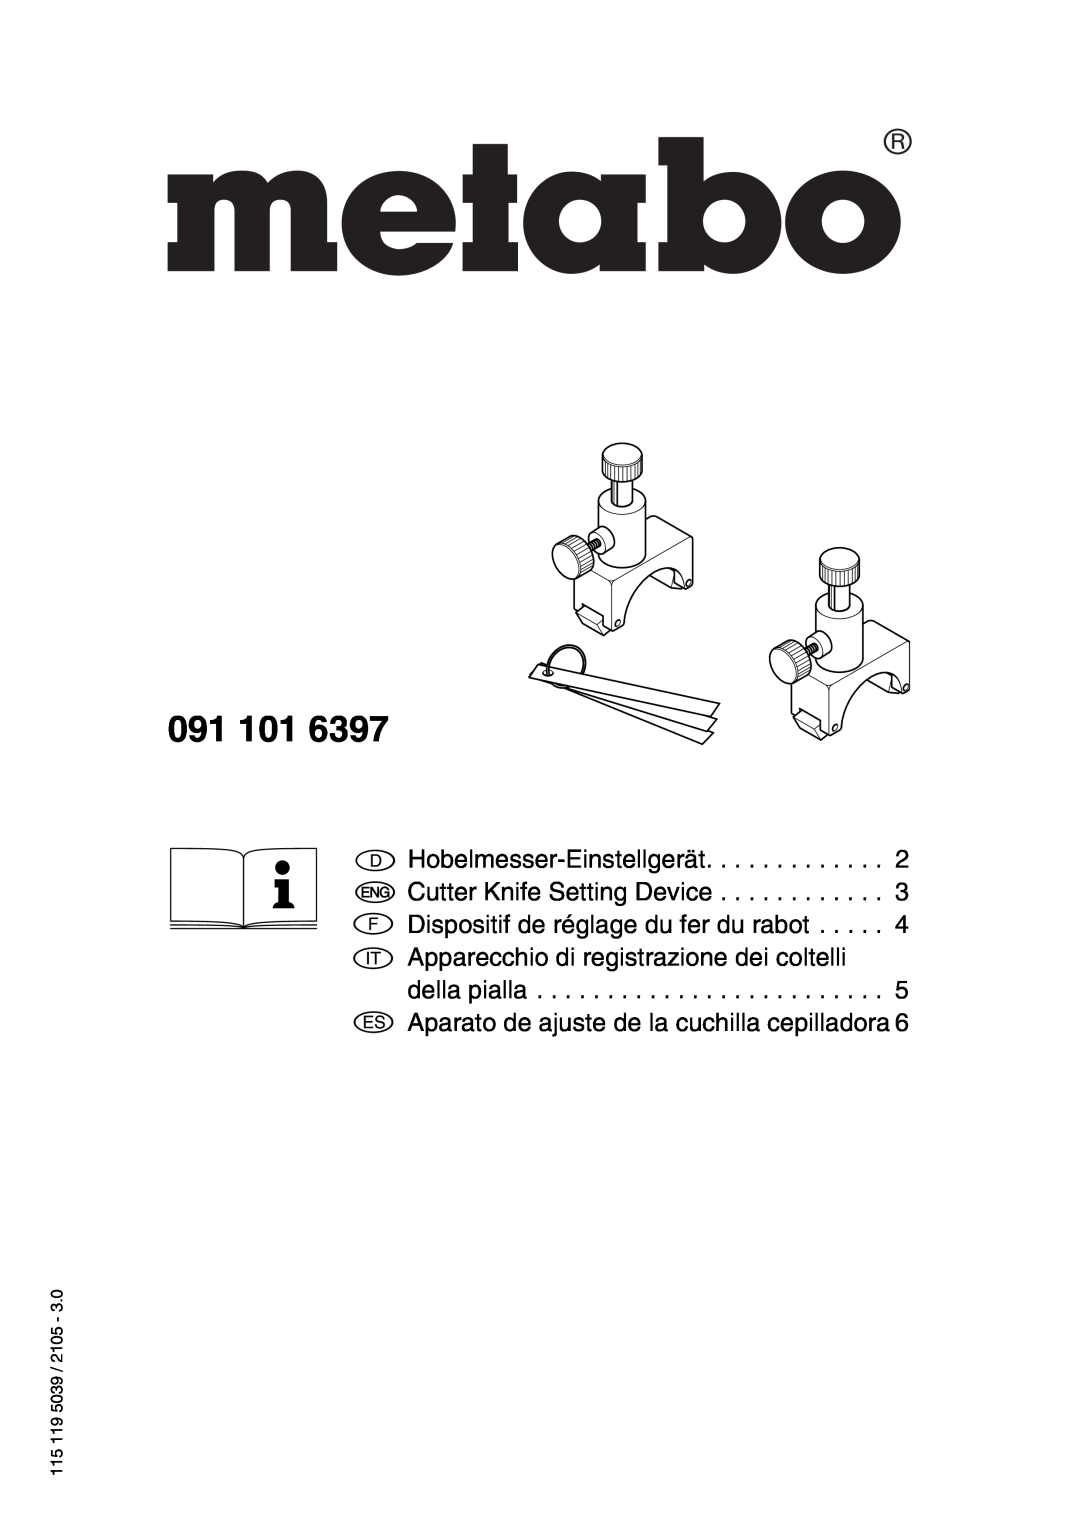 Metabo 091 101 6397 manual Hobelmesser-Einstellgerät Cutter Knife Setting Device, Dispositif de réglage du fer du rabot 